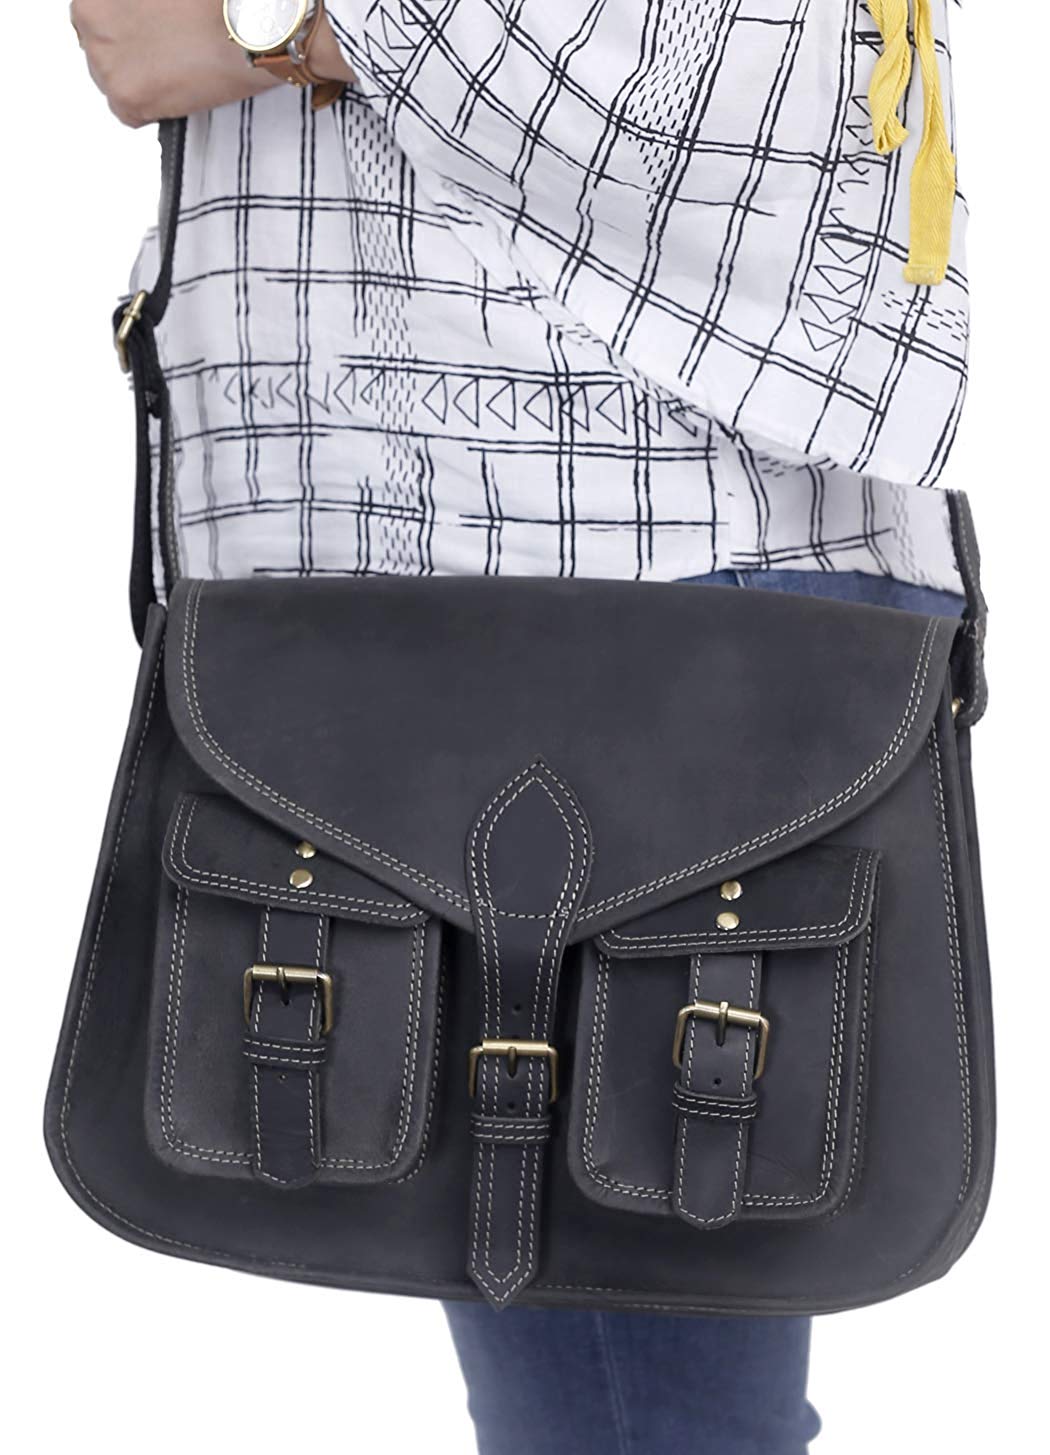  ZiMing Patent Leather Handbags for Women Kiss Lock Tote Bags  Top Handle Purses Evening Handbag Satchel Shoulder Bag Crossbody Bag with  Long Shoulder Straps-Black : Clothing, Shoes & Jewelry